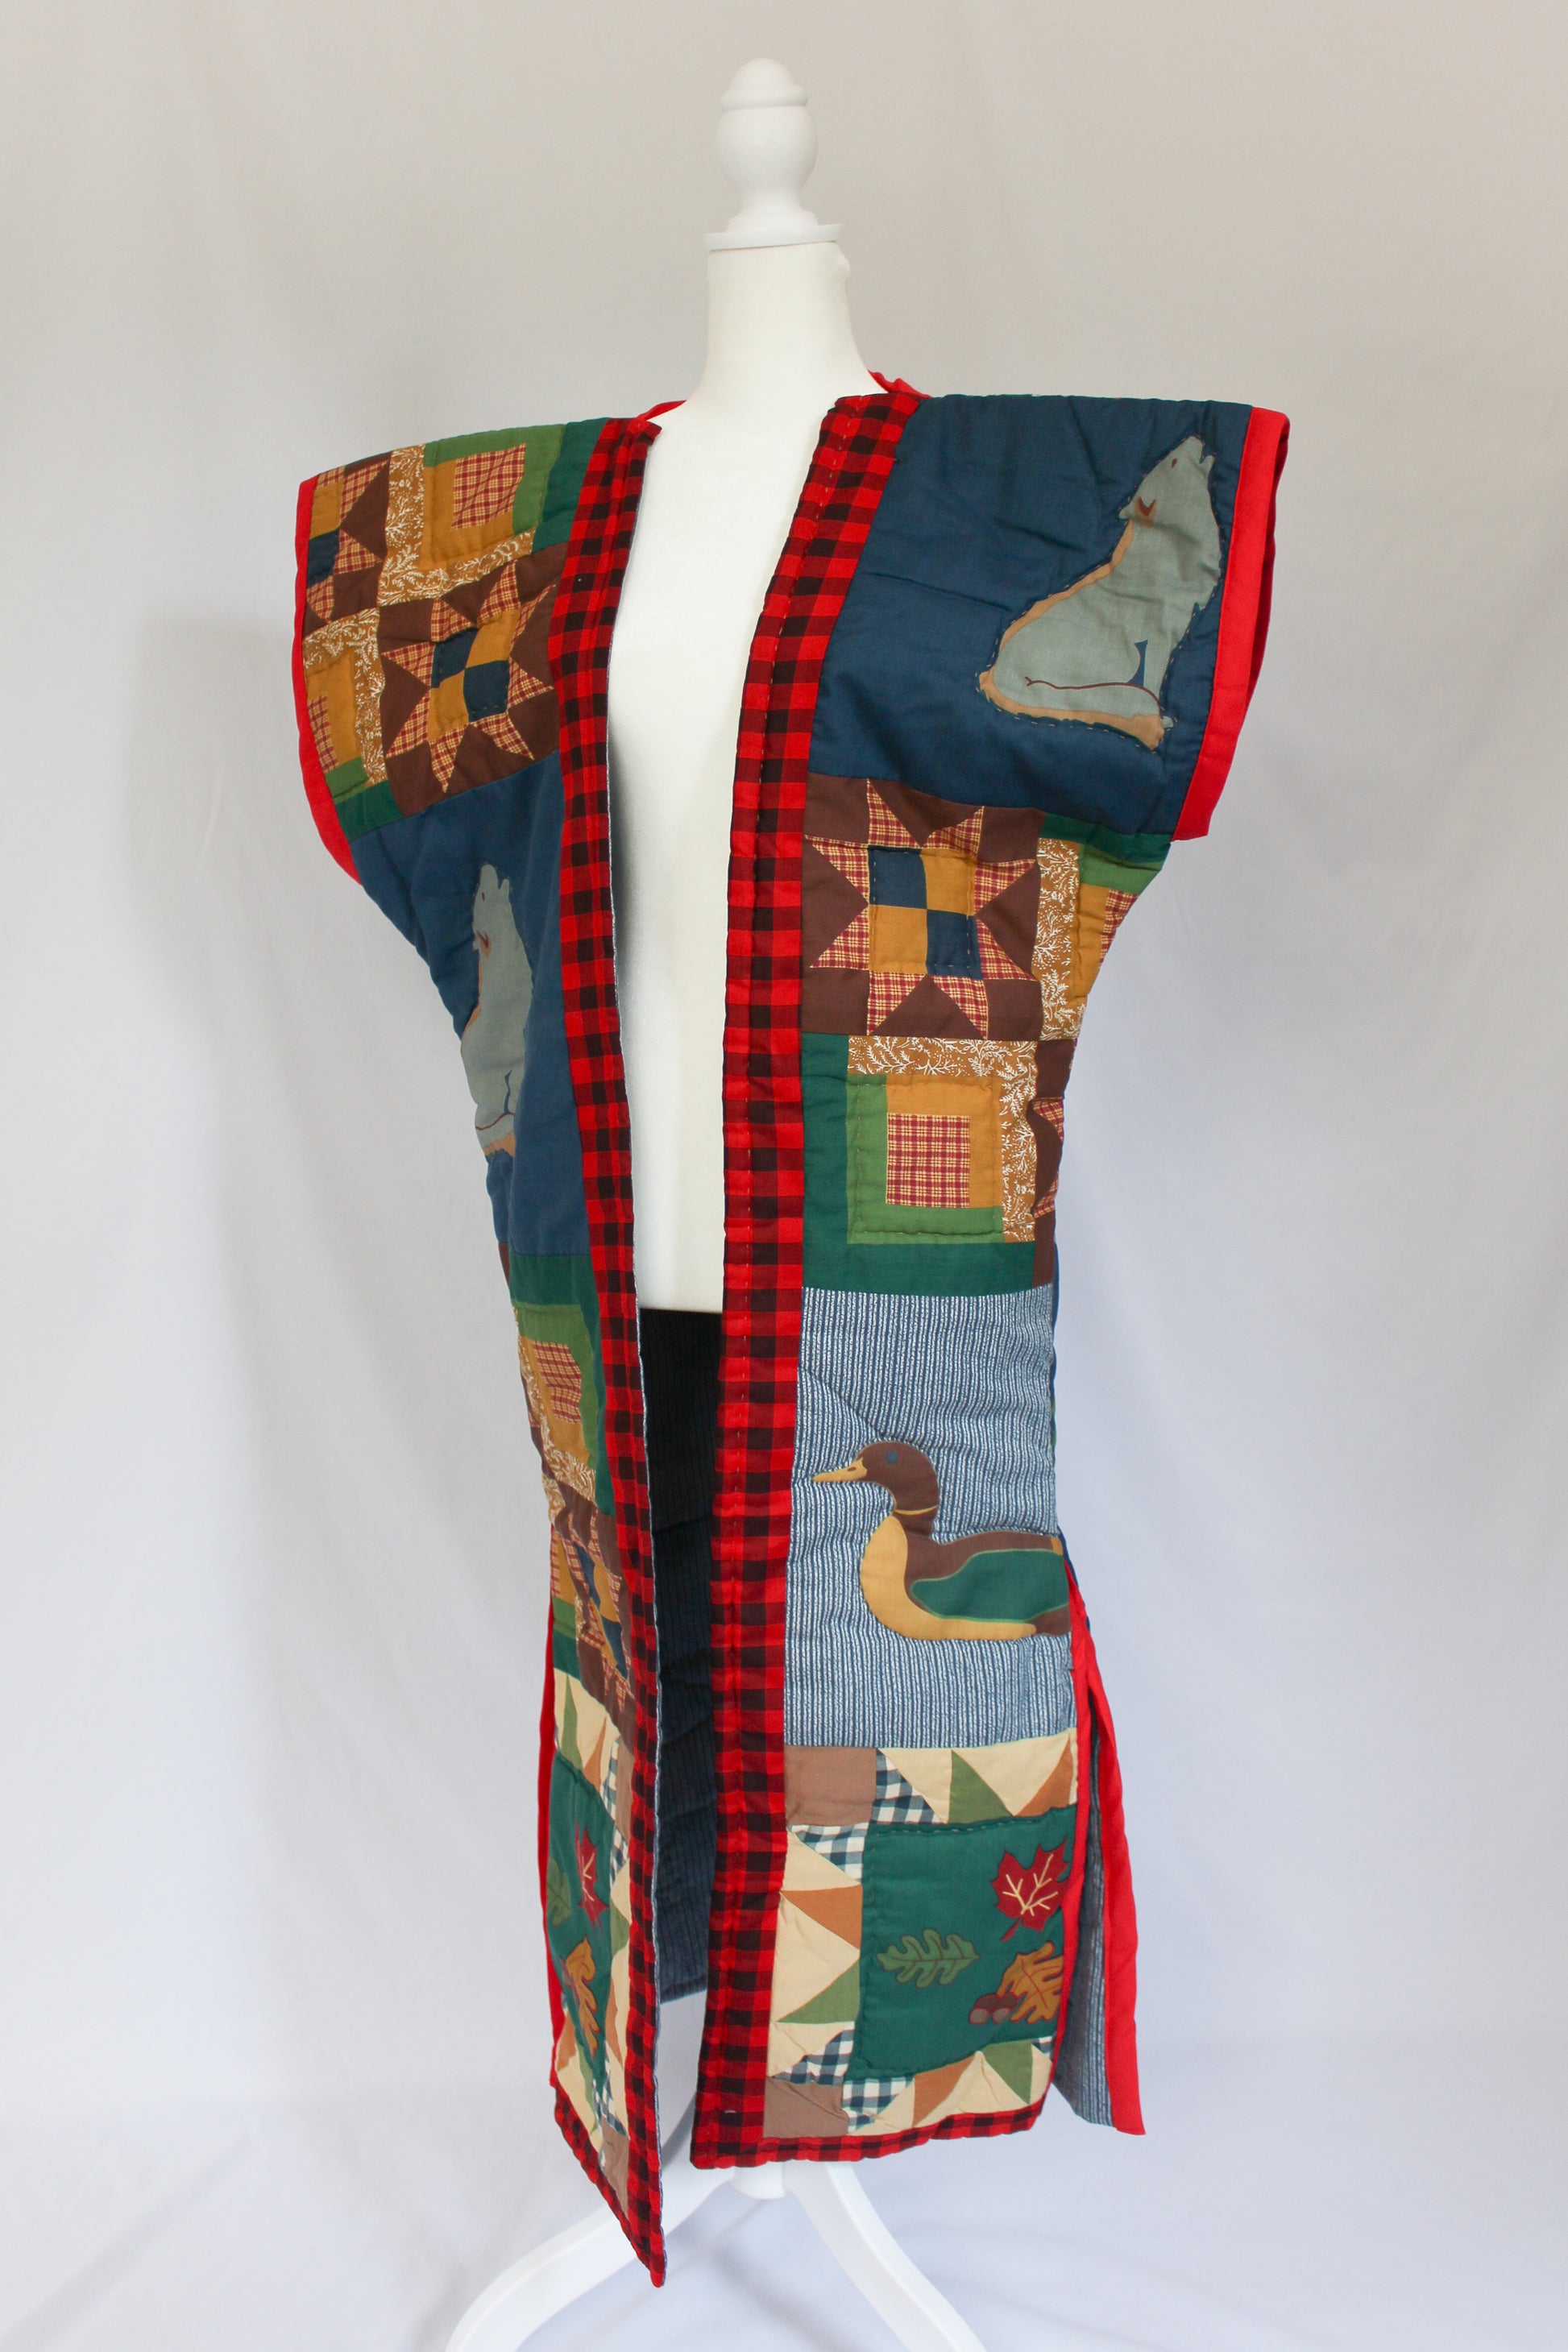 cabin themed quilt vest, quilt vest, upcycled quilt vest, recycled quilt vest